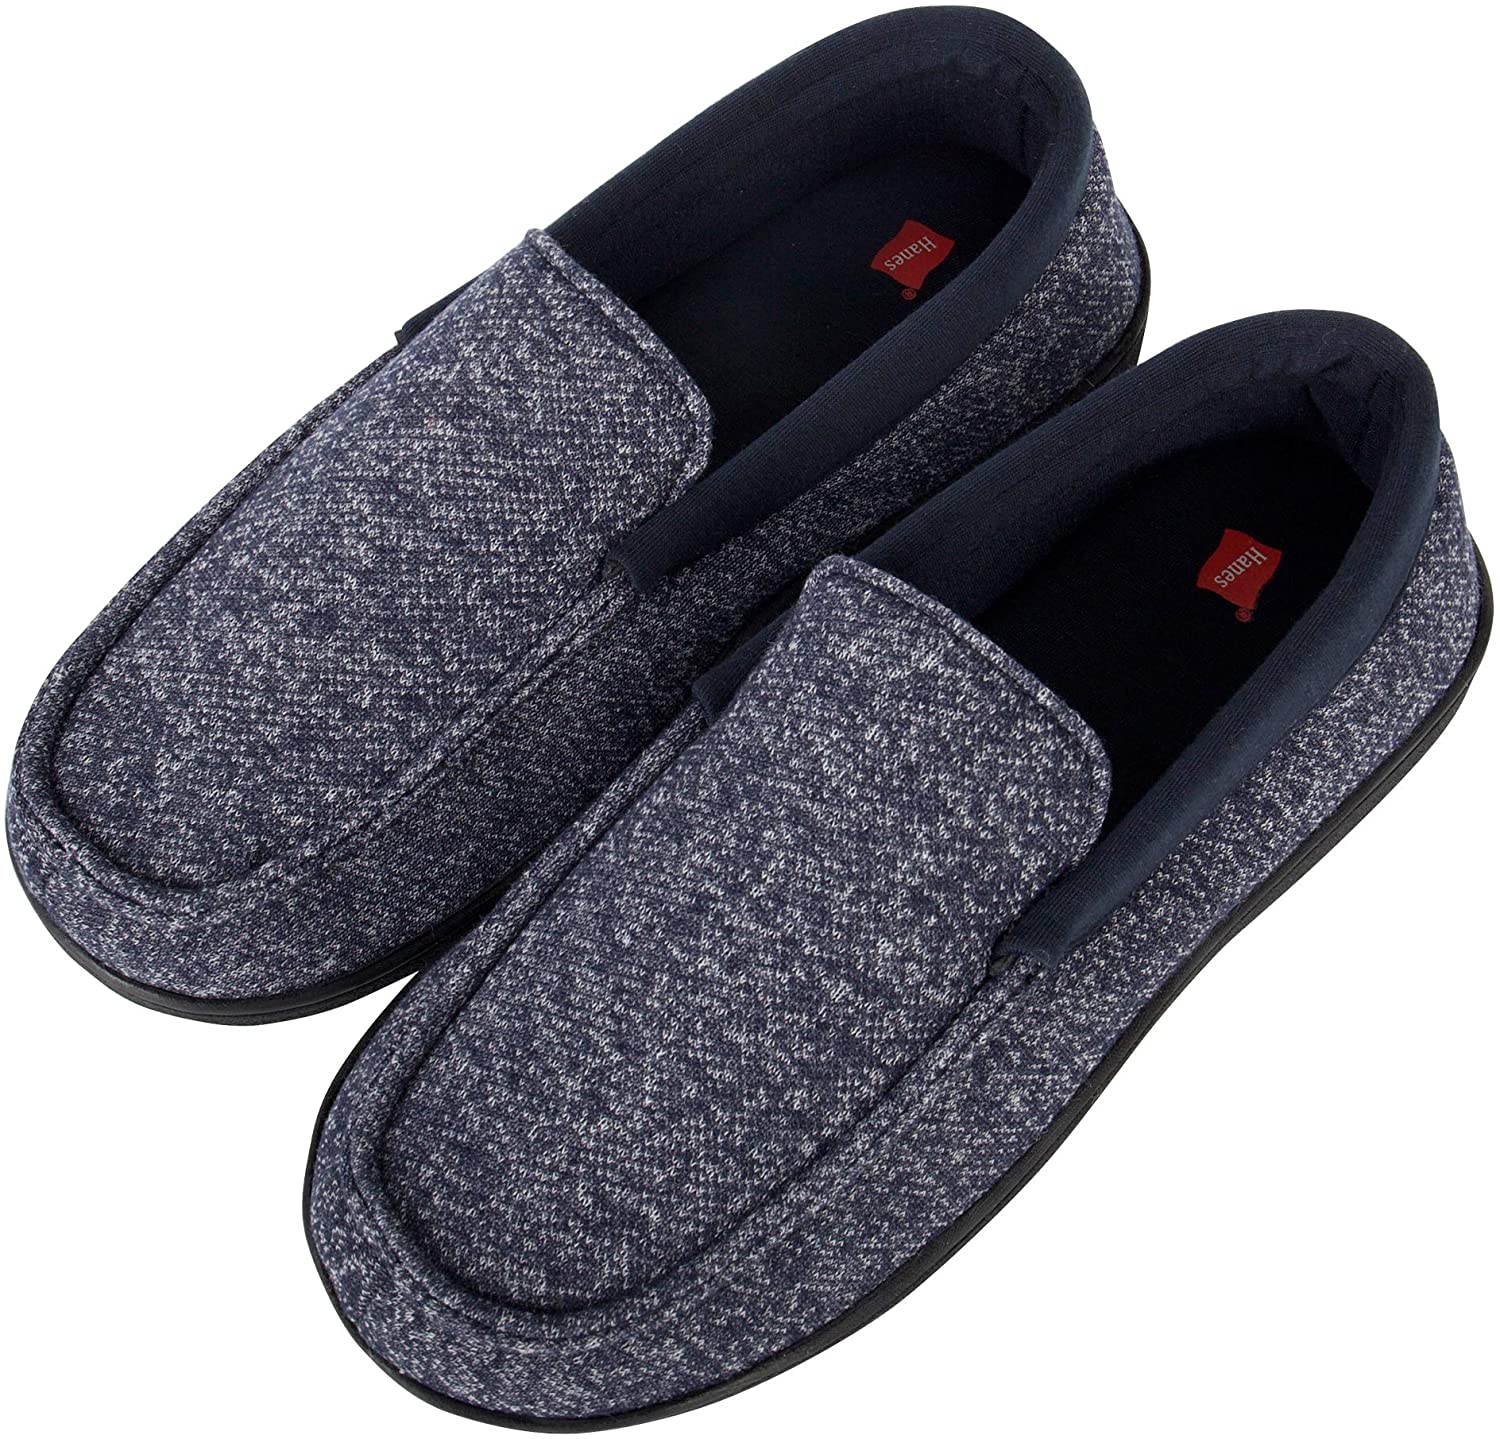 Hanes Men's Slippers House Shoes Moccasin Comfort Memory Foam, Navy ...